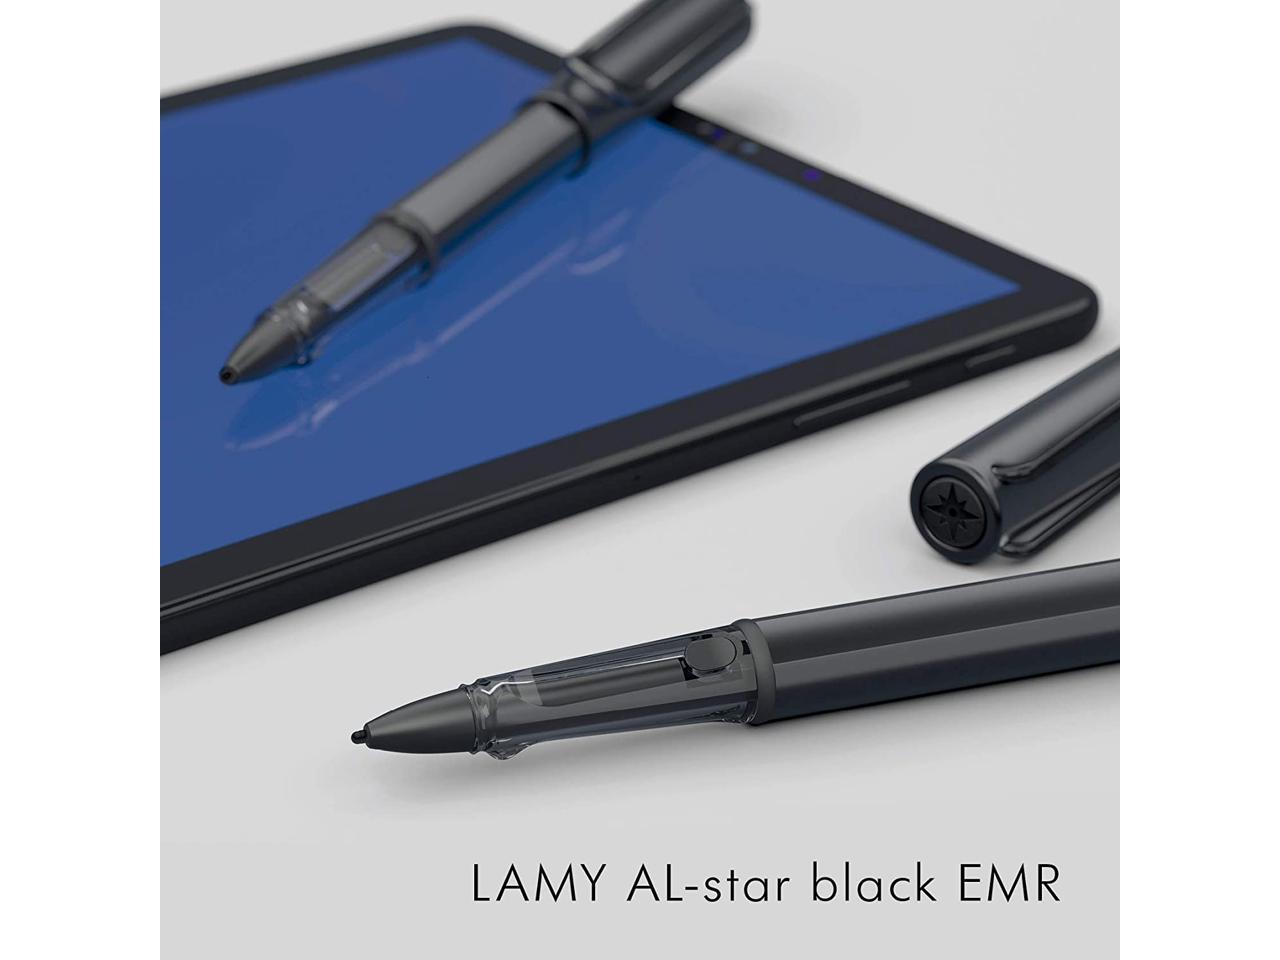 LAMY AL-Star Black EMR Stylus Digital Writing Instrument in Black Made of Aluminum Smartphones and notebooks matt Black Anodized Digital Input Pen for Tablets 